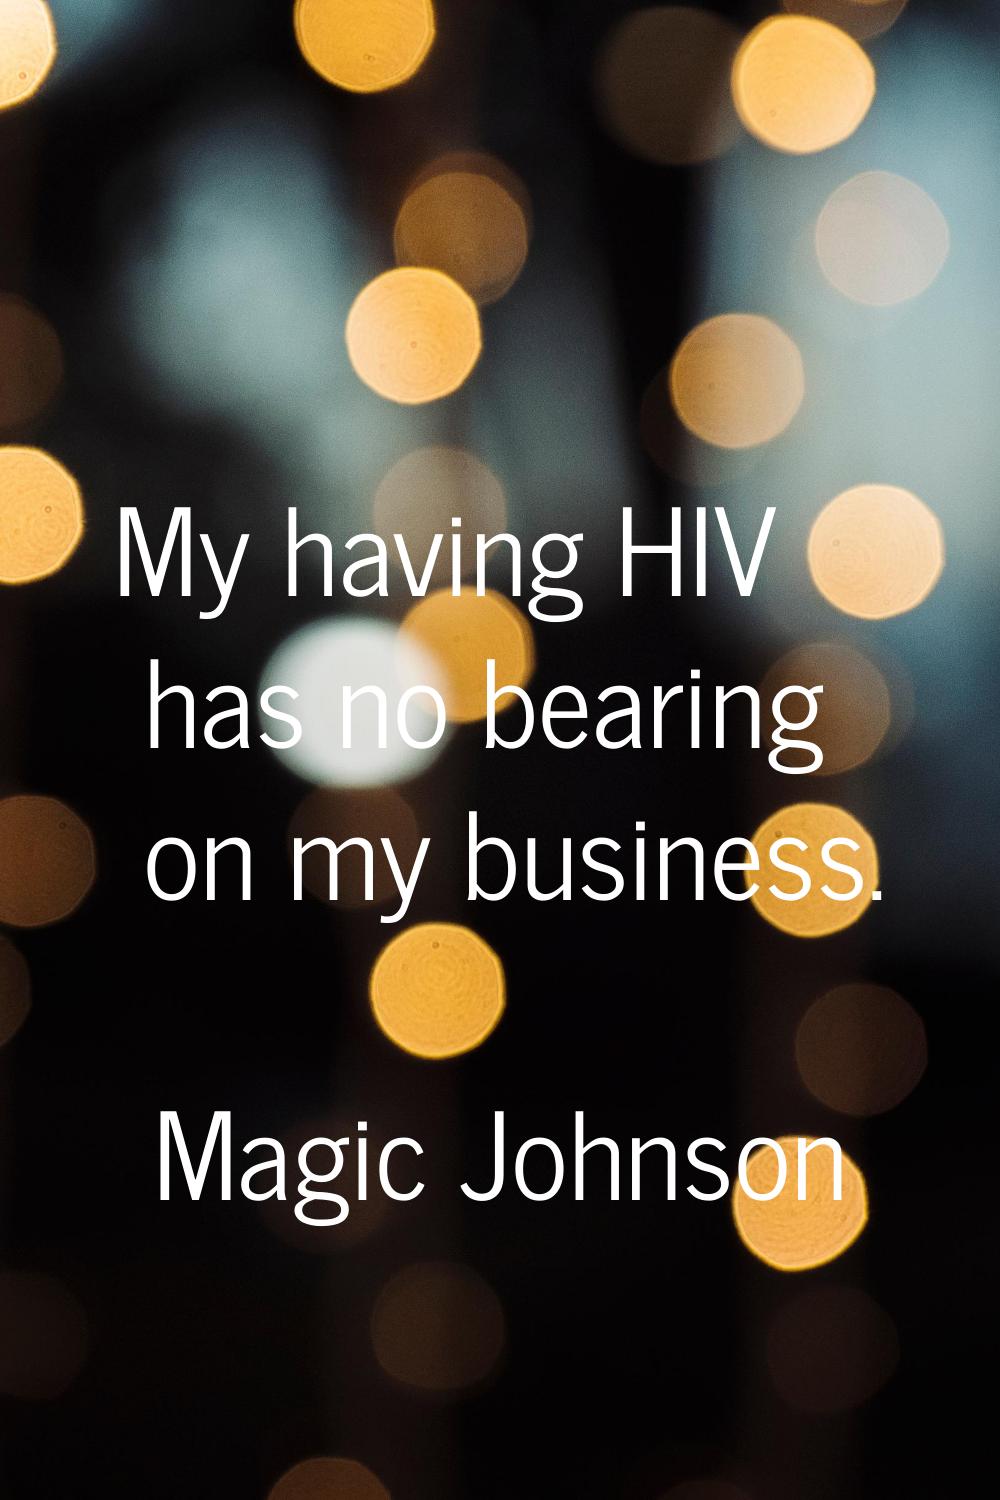 My having HIV has no bearing on my business.